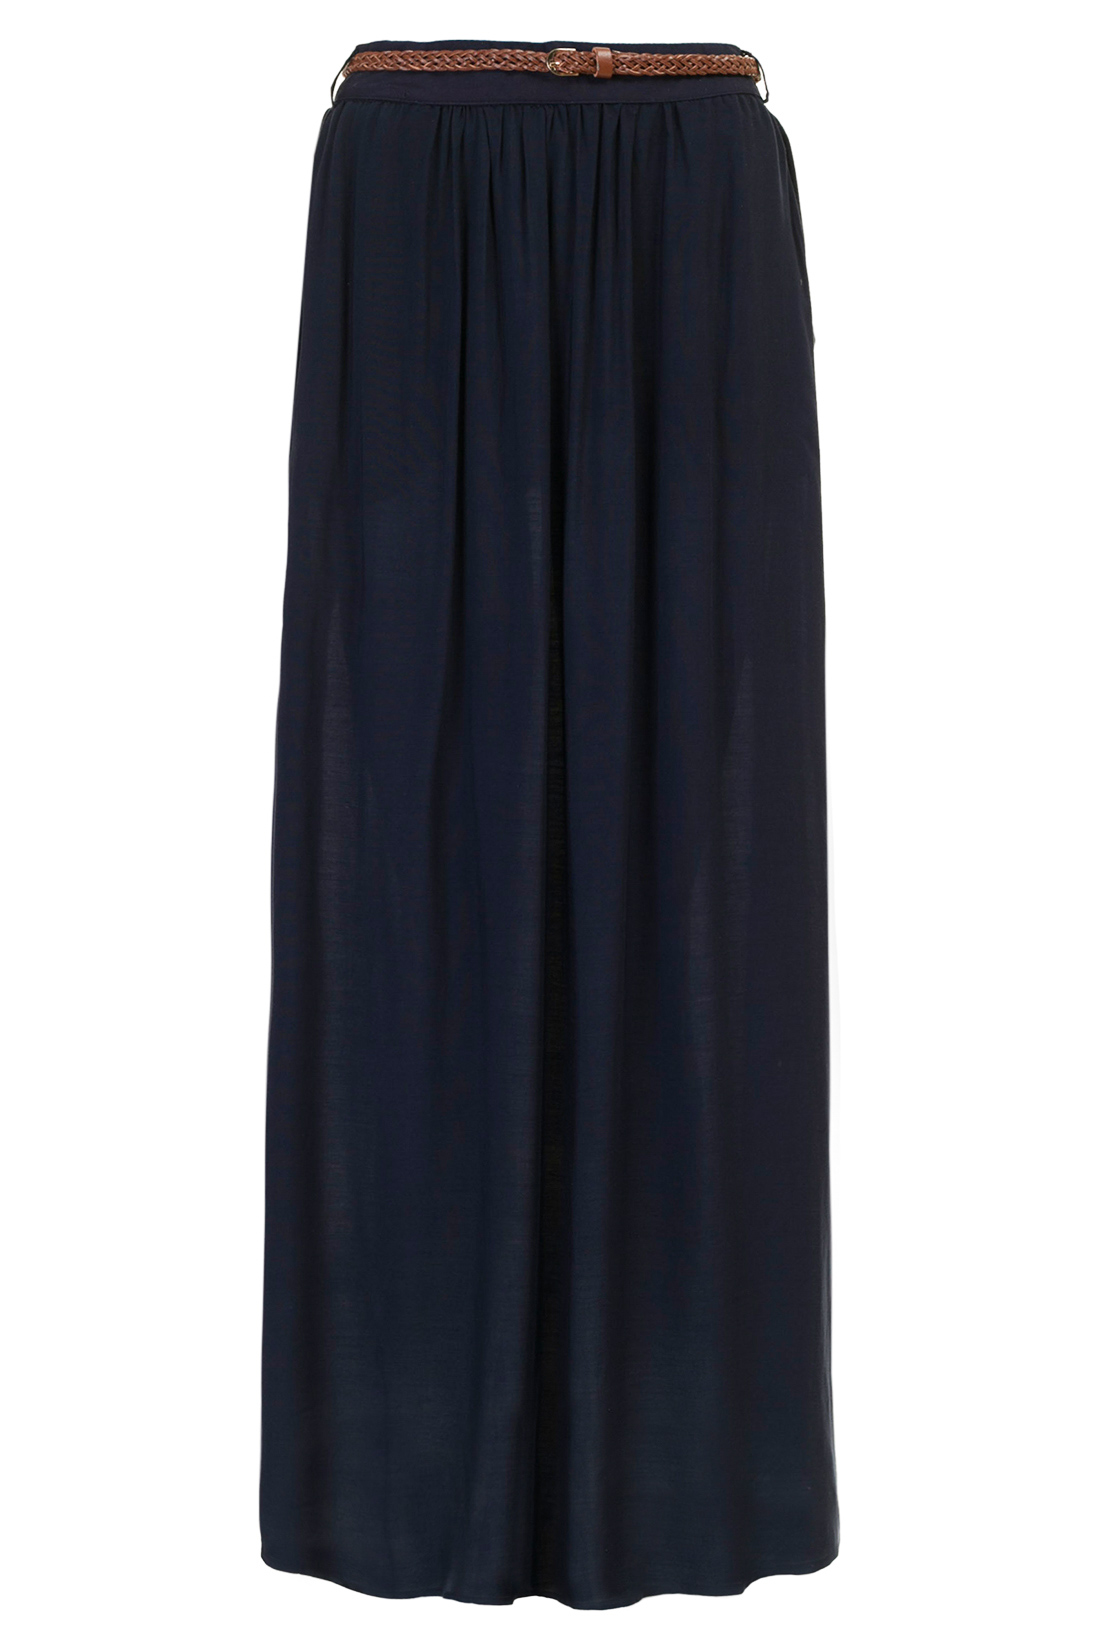 Длинная юбка с ремешком (арт. baon B477041), размер 3XL, цвет синий Длинная юбка с ремешком (арт. baon B477041) - фото 5